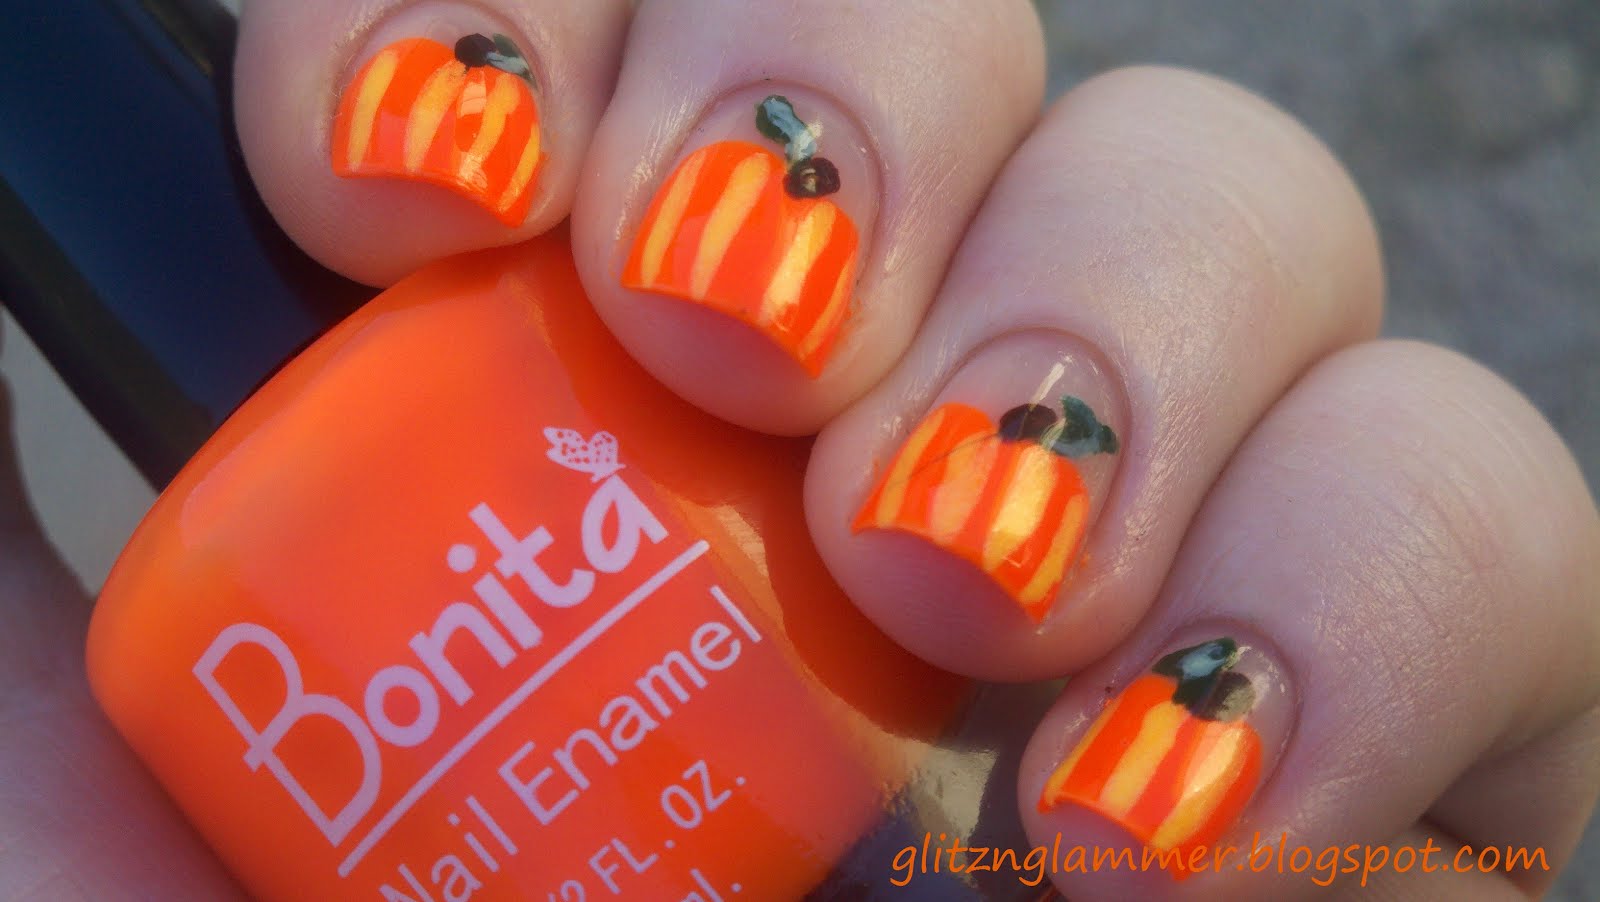 glitznglammer: Halloween Nail Art Challenge: Day 1- Pumpkin